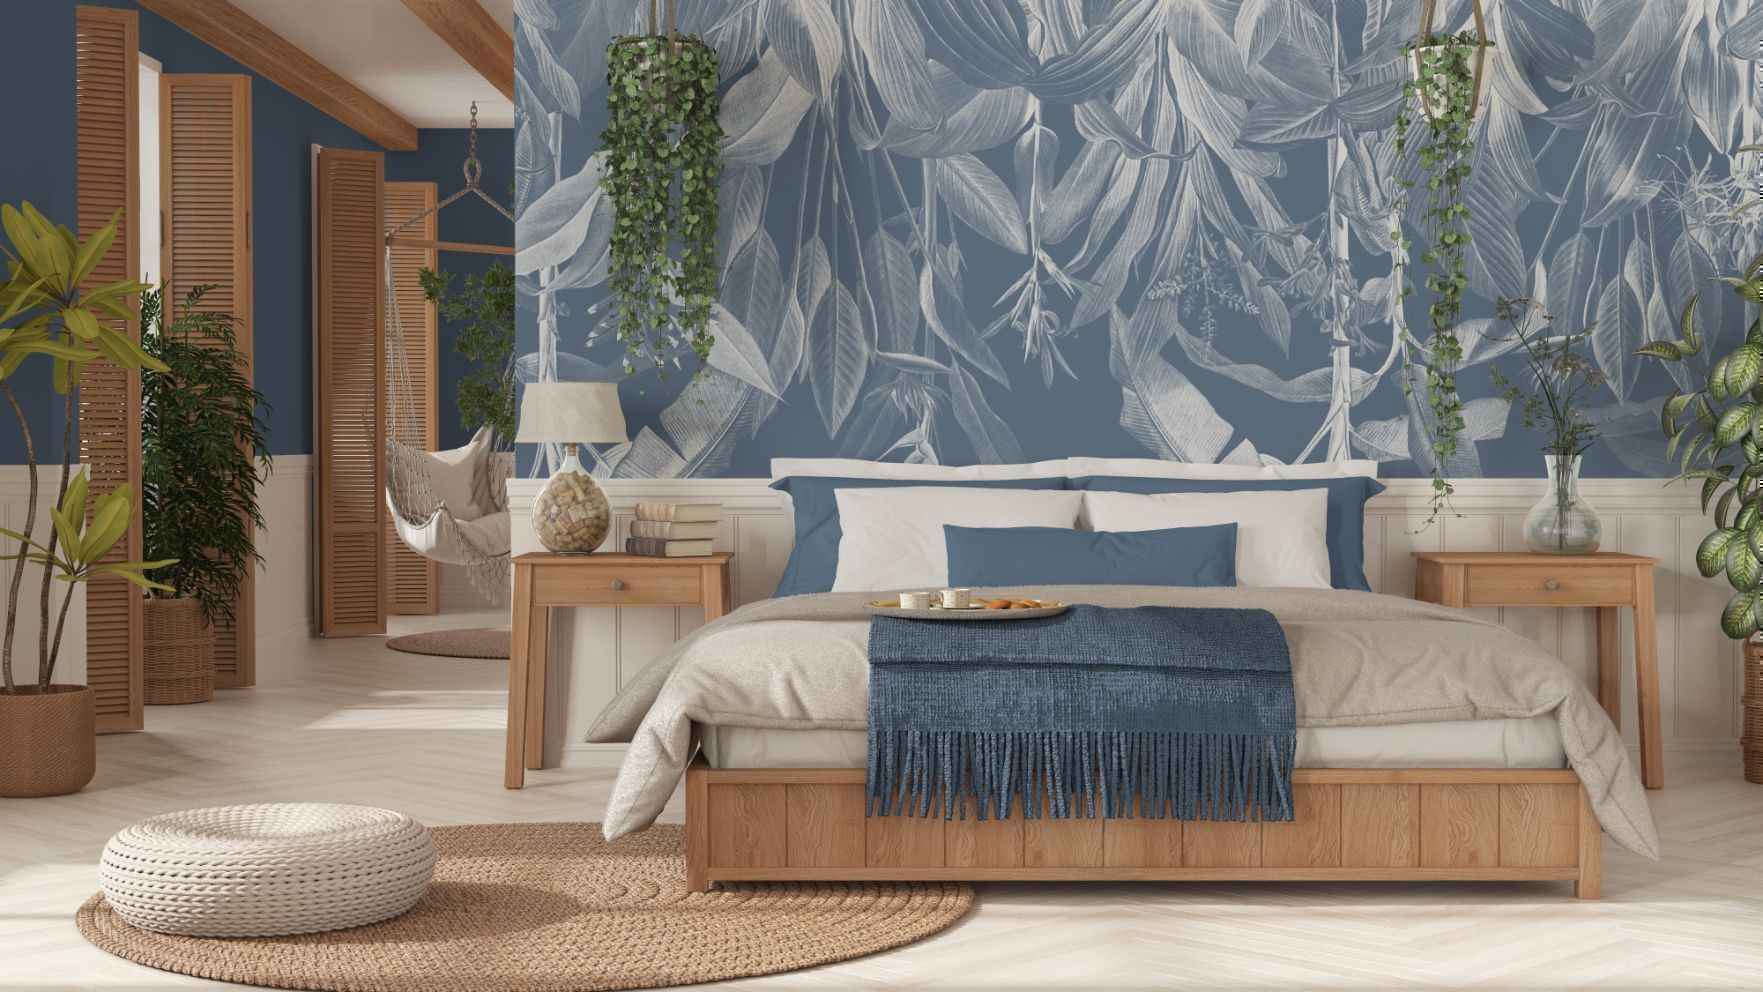 20 3D Wallpaper for Bedroom Wall Design Ideas